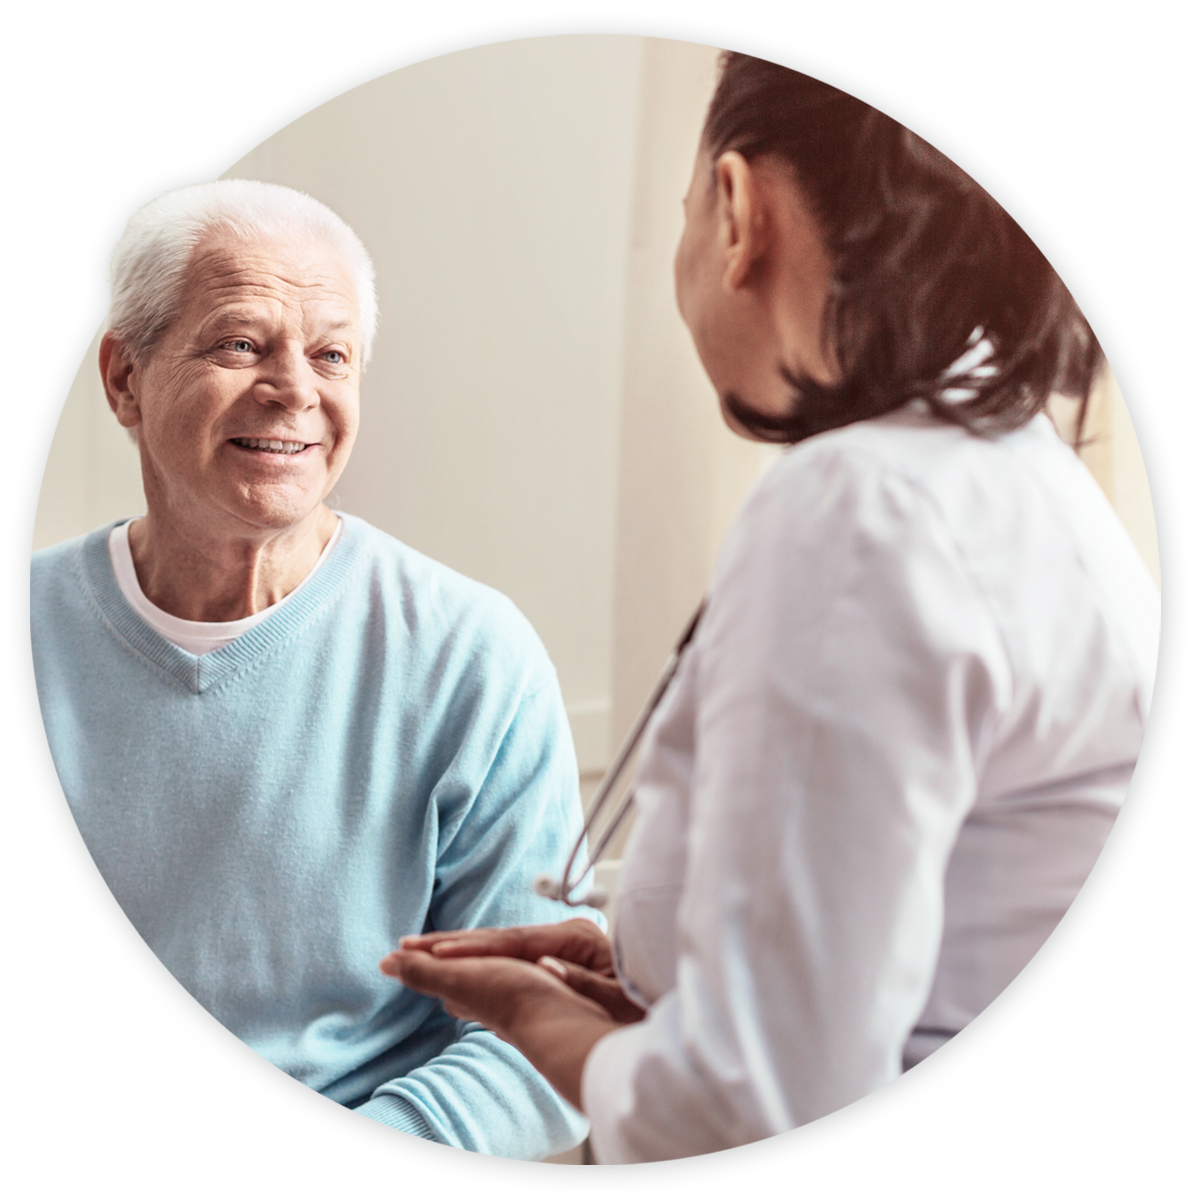 Urologist talking to older male patient